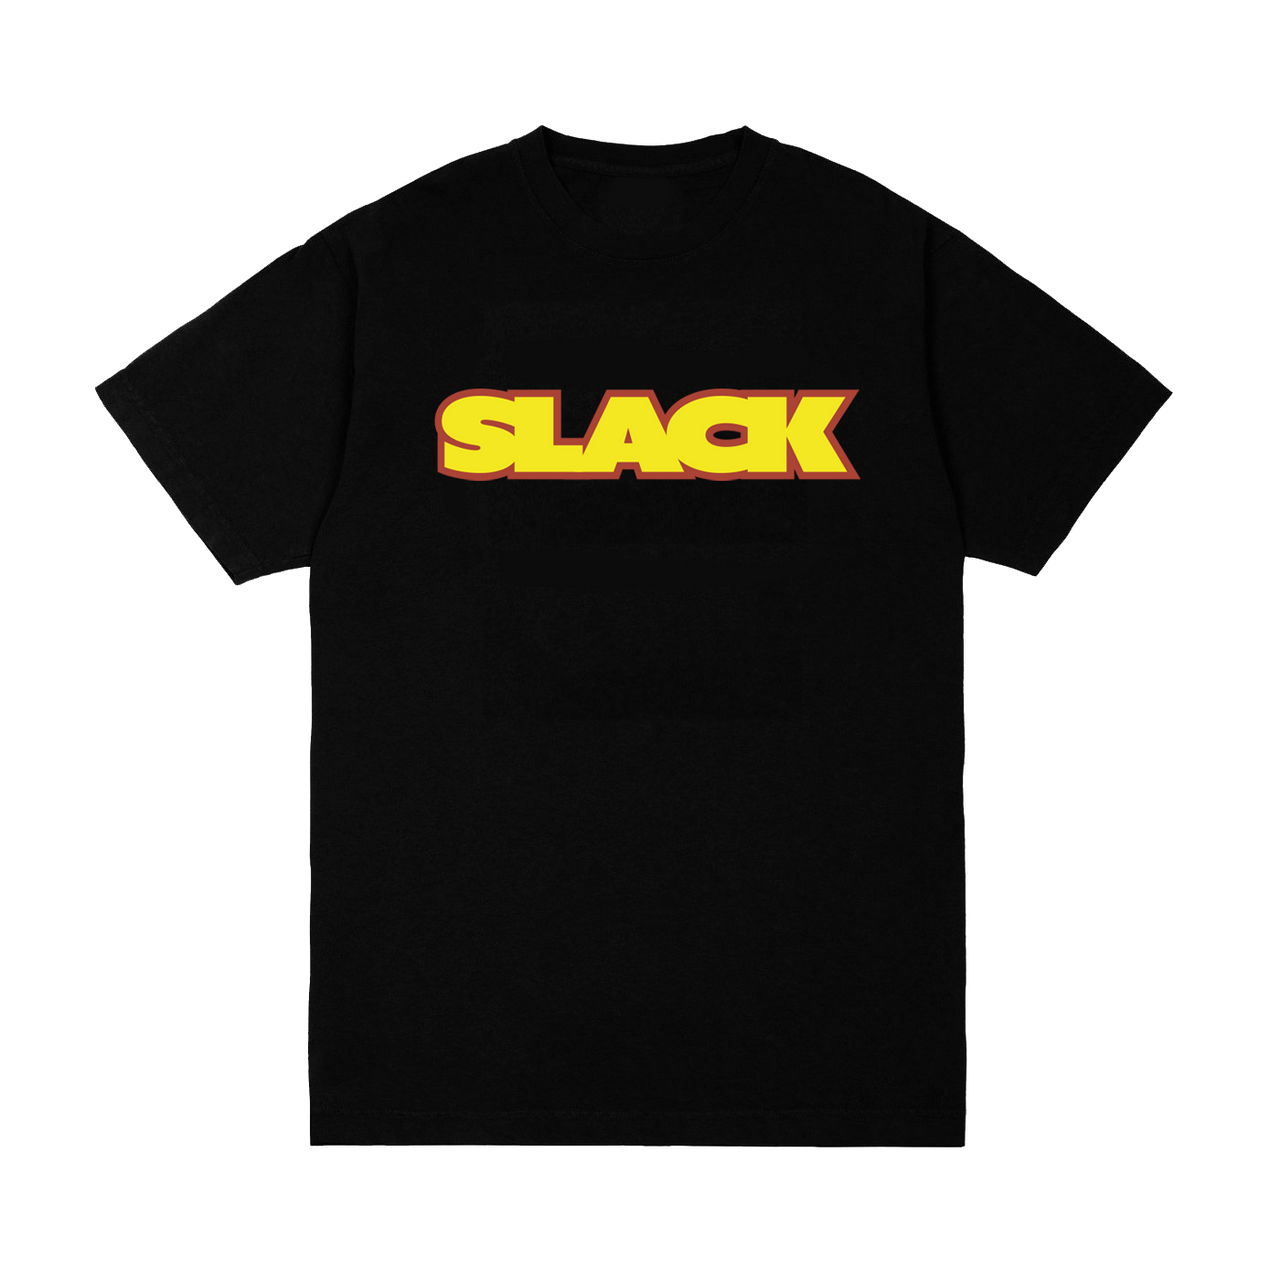 Slack "Classy" T-Shirt